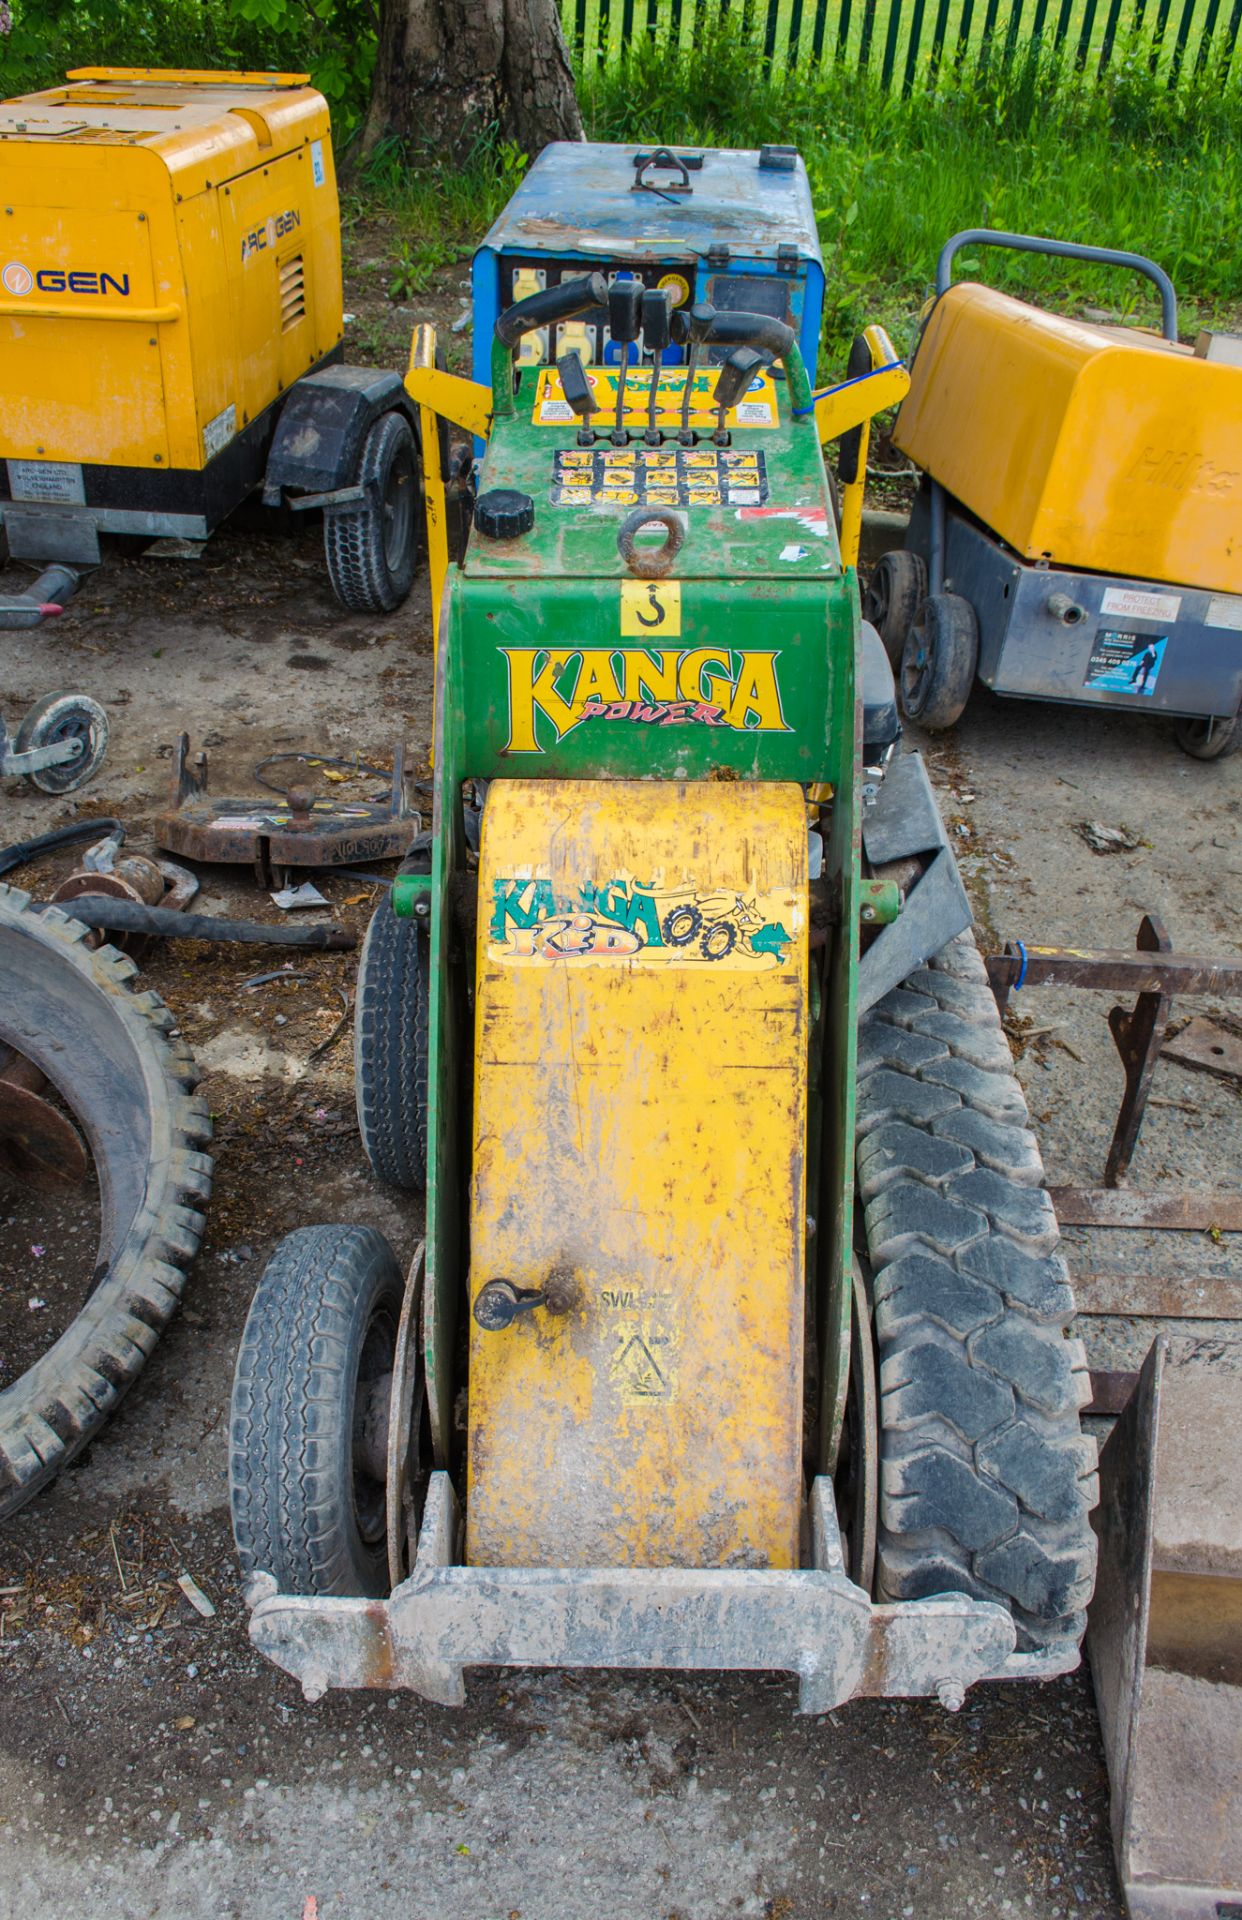 Kanga TK216 pedestrian operated petrol driven skid steer loader c/w rubber tracks, bucket, levelling - Image 6 of 15